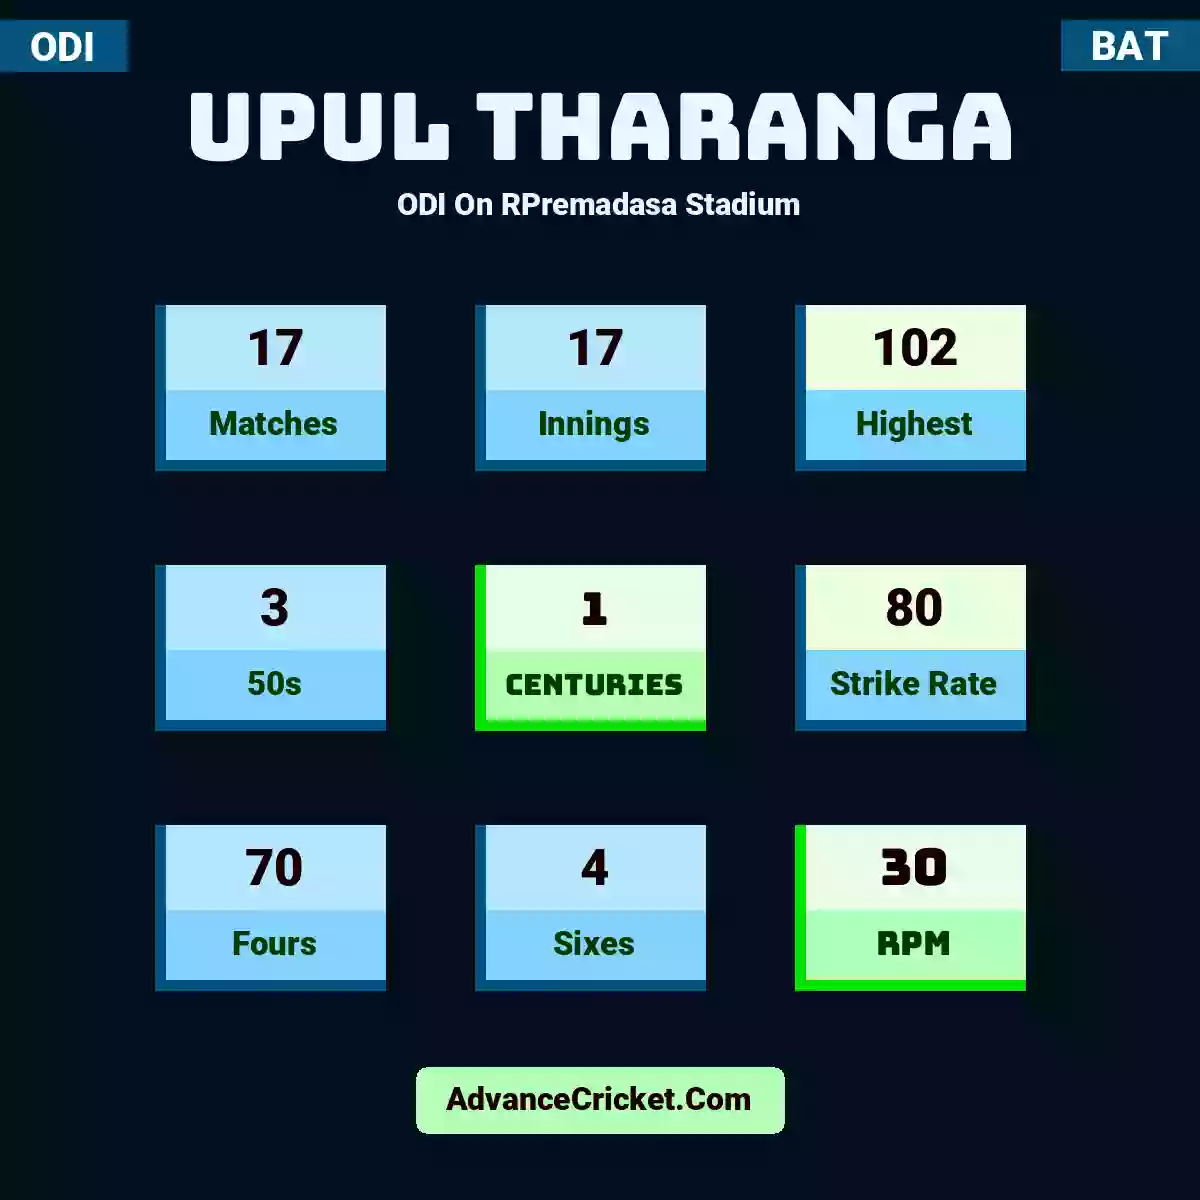 Upul Tharanga ODI  On RPremadasa Stadium, Upul Tharanga played 17 matches, scored 102 runs as highest, 3 half-centuries, and 1 centuries, with a strike rate of 80. U.Tharanga hit 70 fours and 4 sixes, with an RPM of 30.